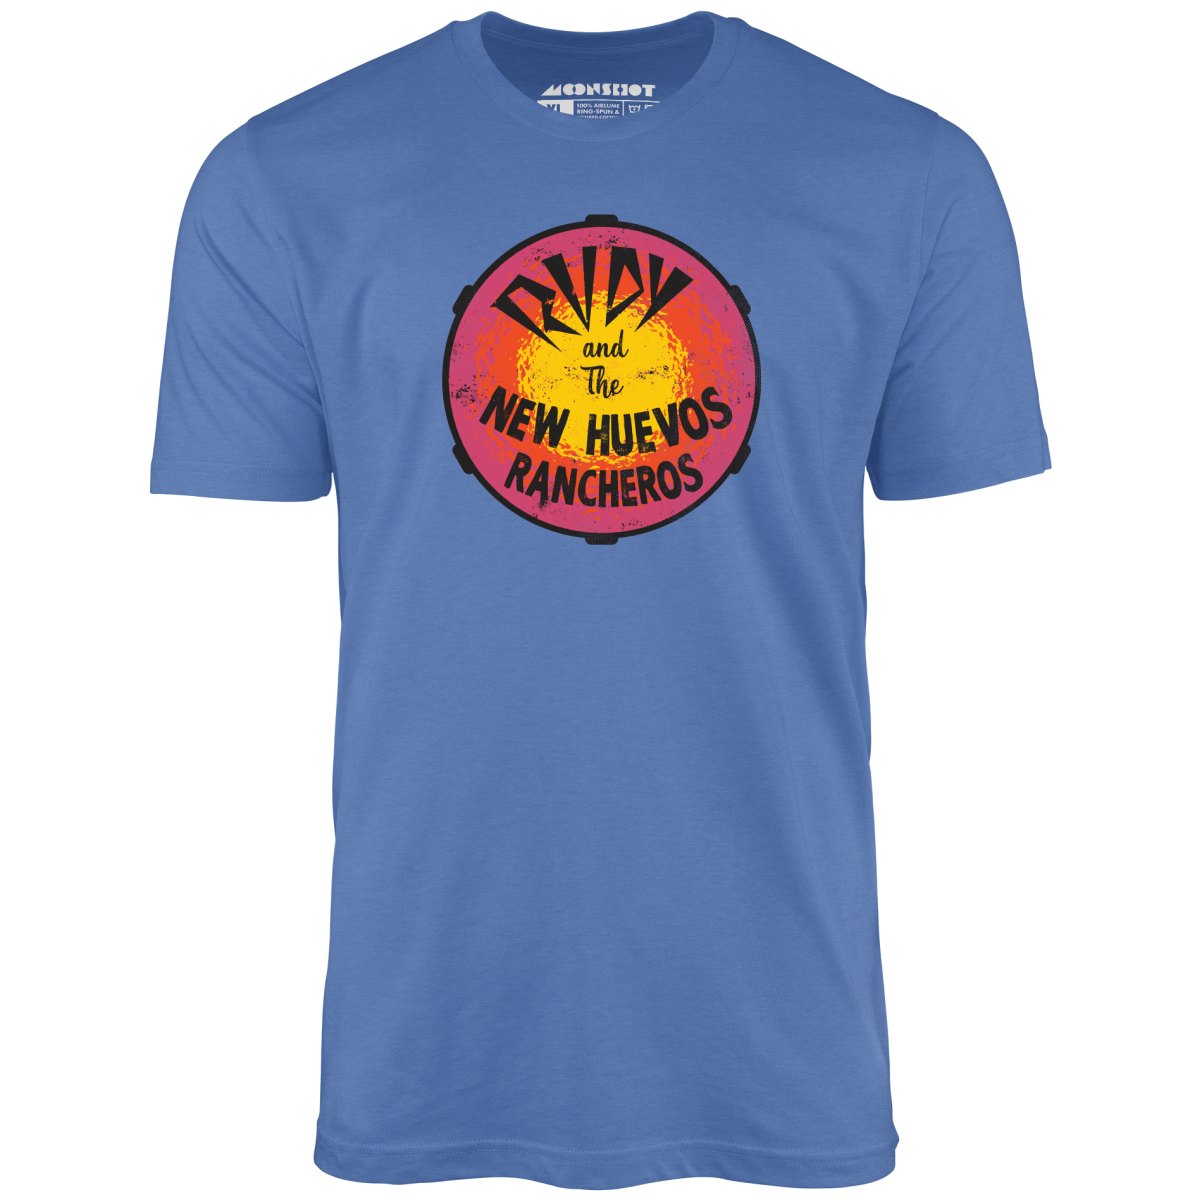 Rudy and the New Huevos Rancheros - Unisex T-Shirt